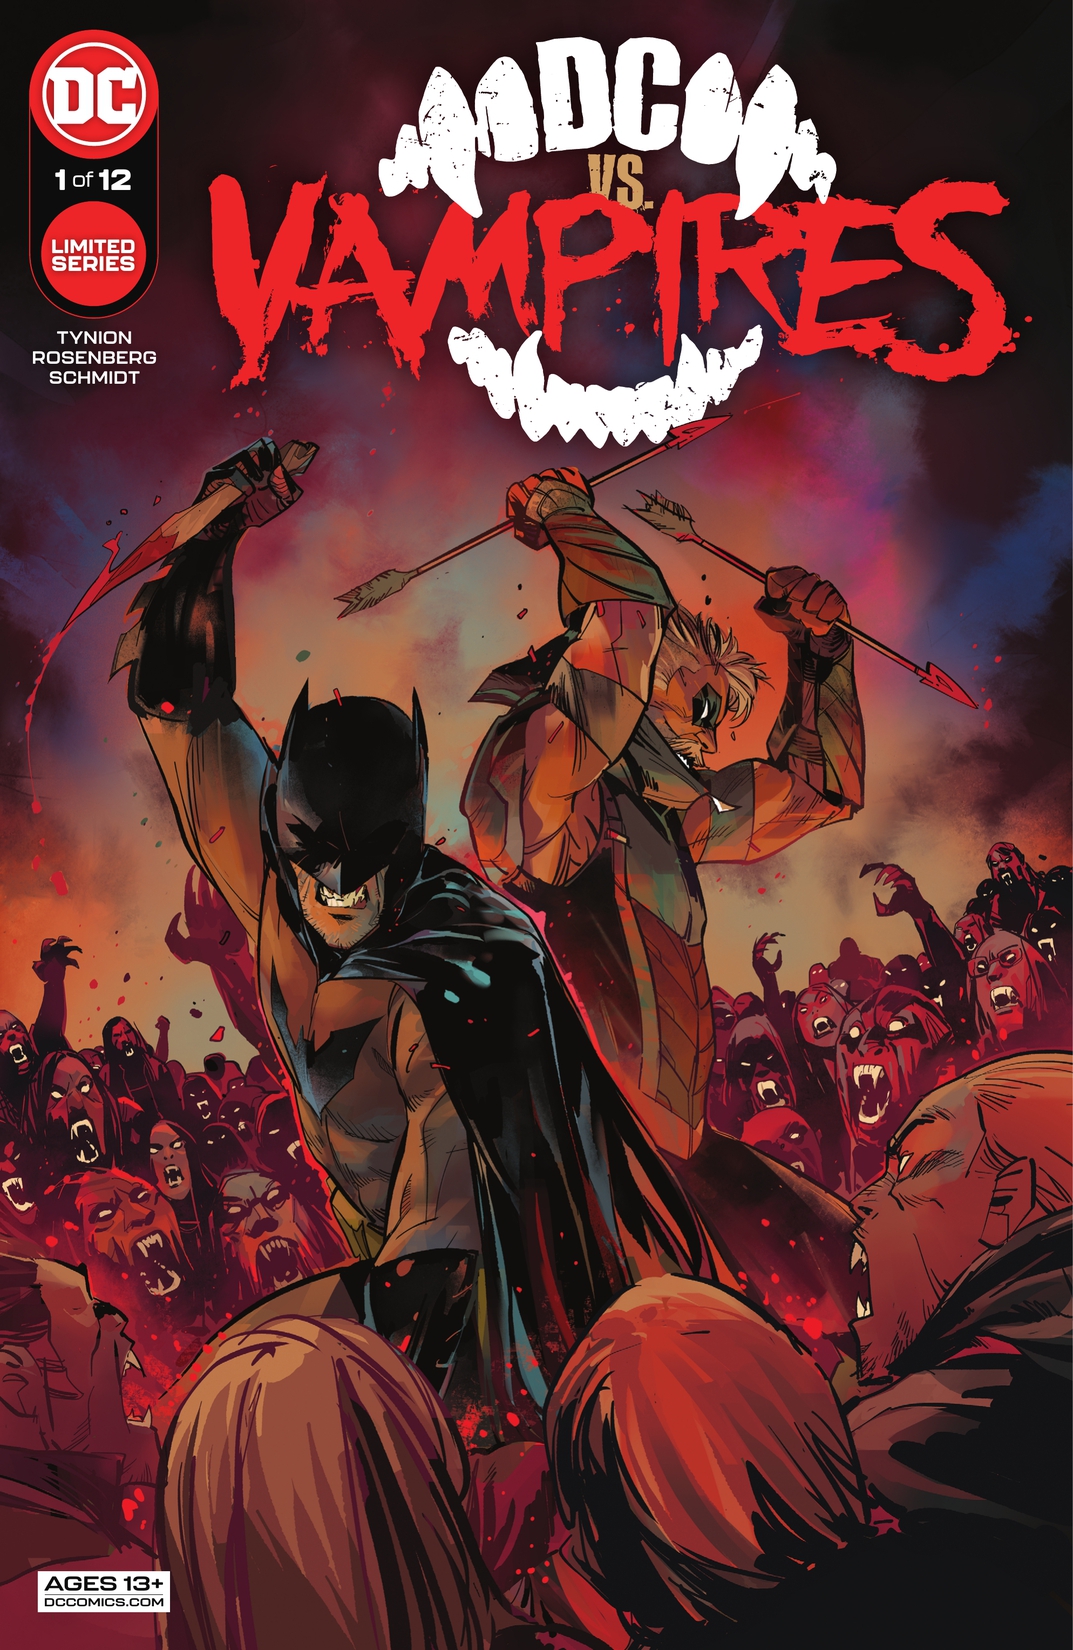 DC vs. Vampires #1 preview images